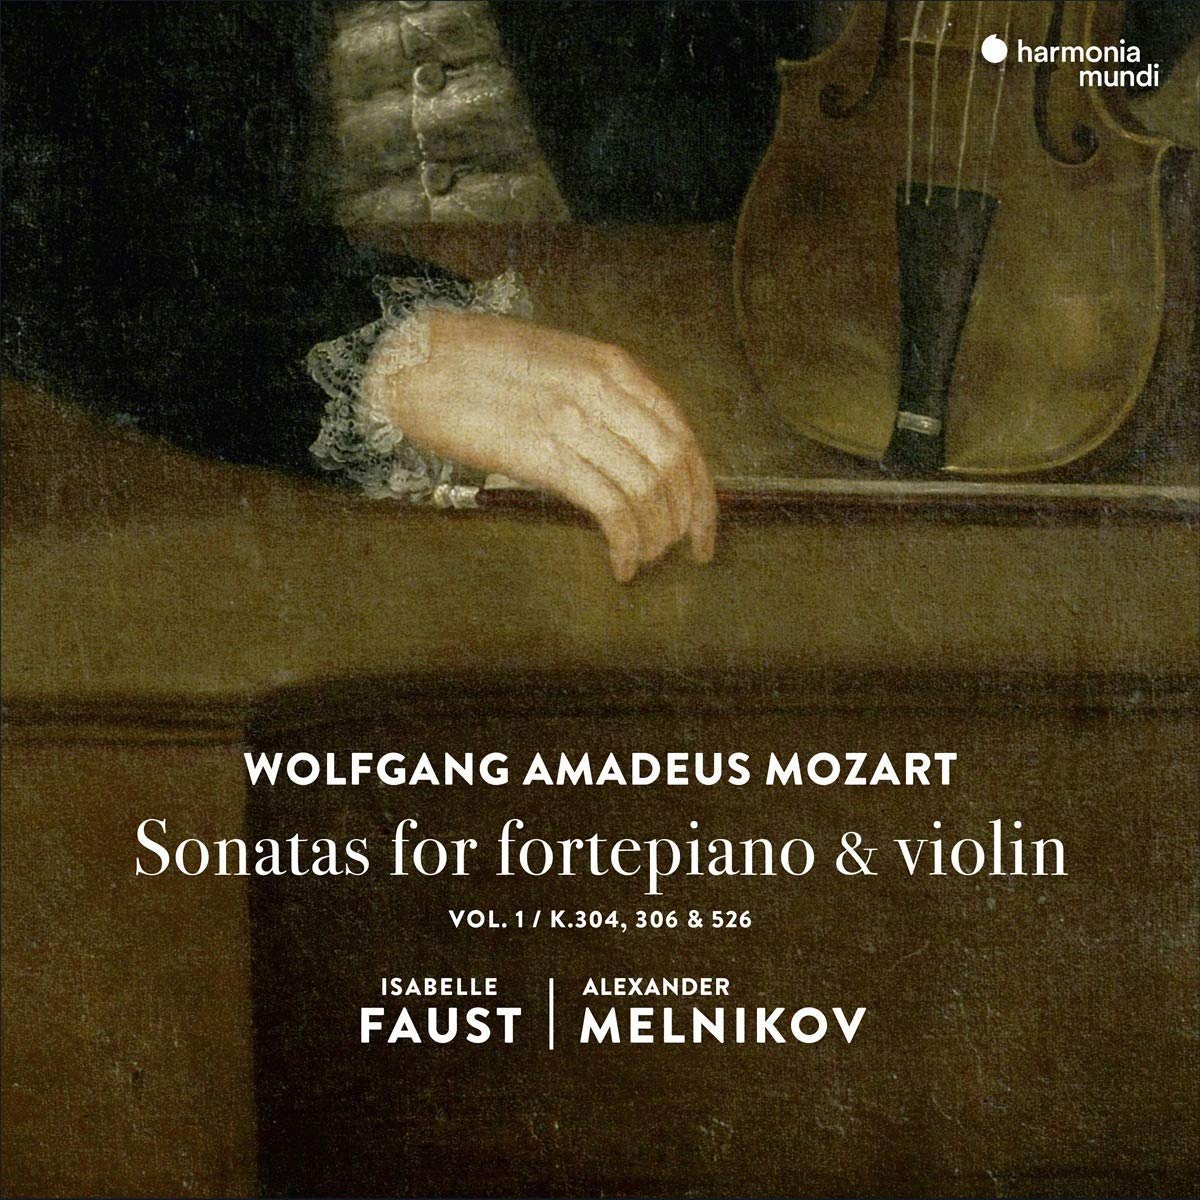 Isabelle Faust & Alexander Melnikov - Mozart: Sonatas for Fortepiano & Violin, Vol. 1: K. 304, 306 & 526 - Reviews - Album of Year